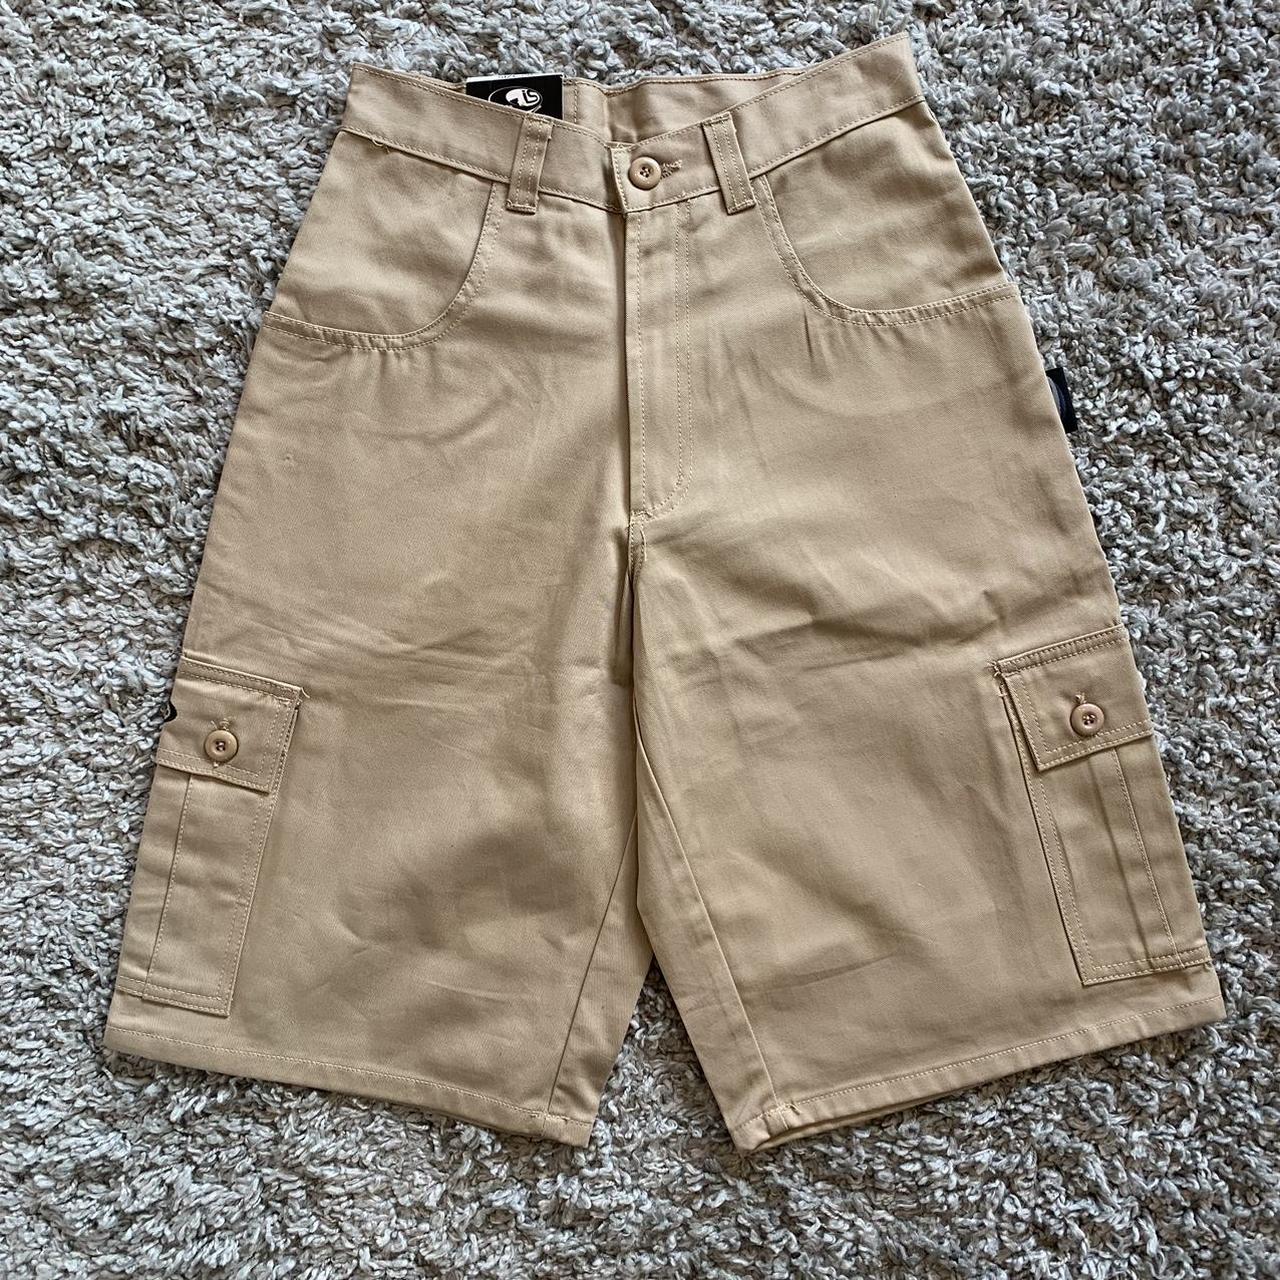 JNCO Men's Khaki Shorts | Depop